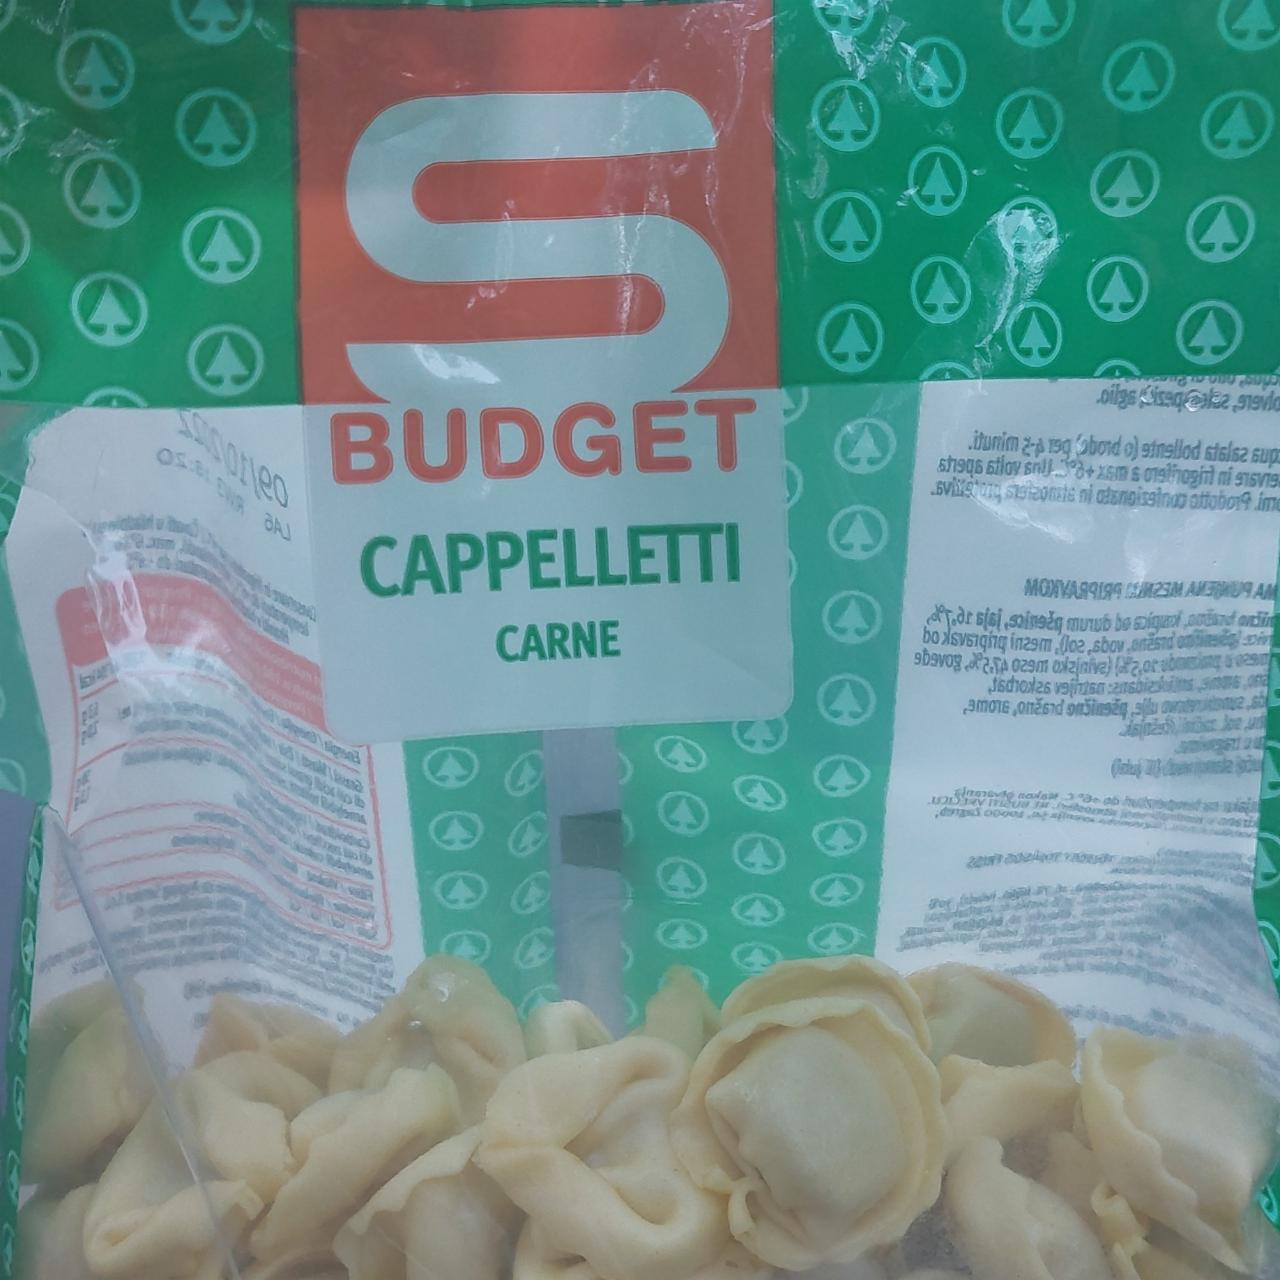 Fotografie - Cappelletti Carne S Budget